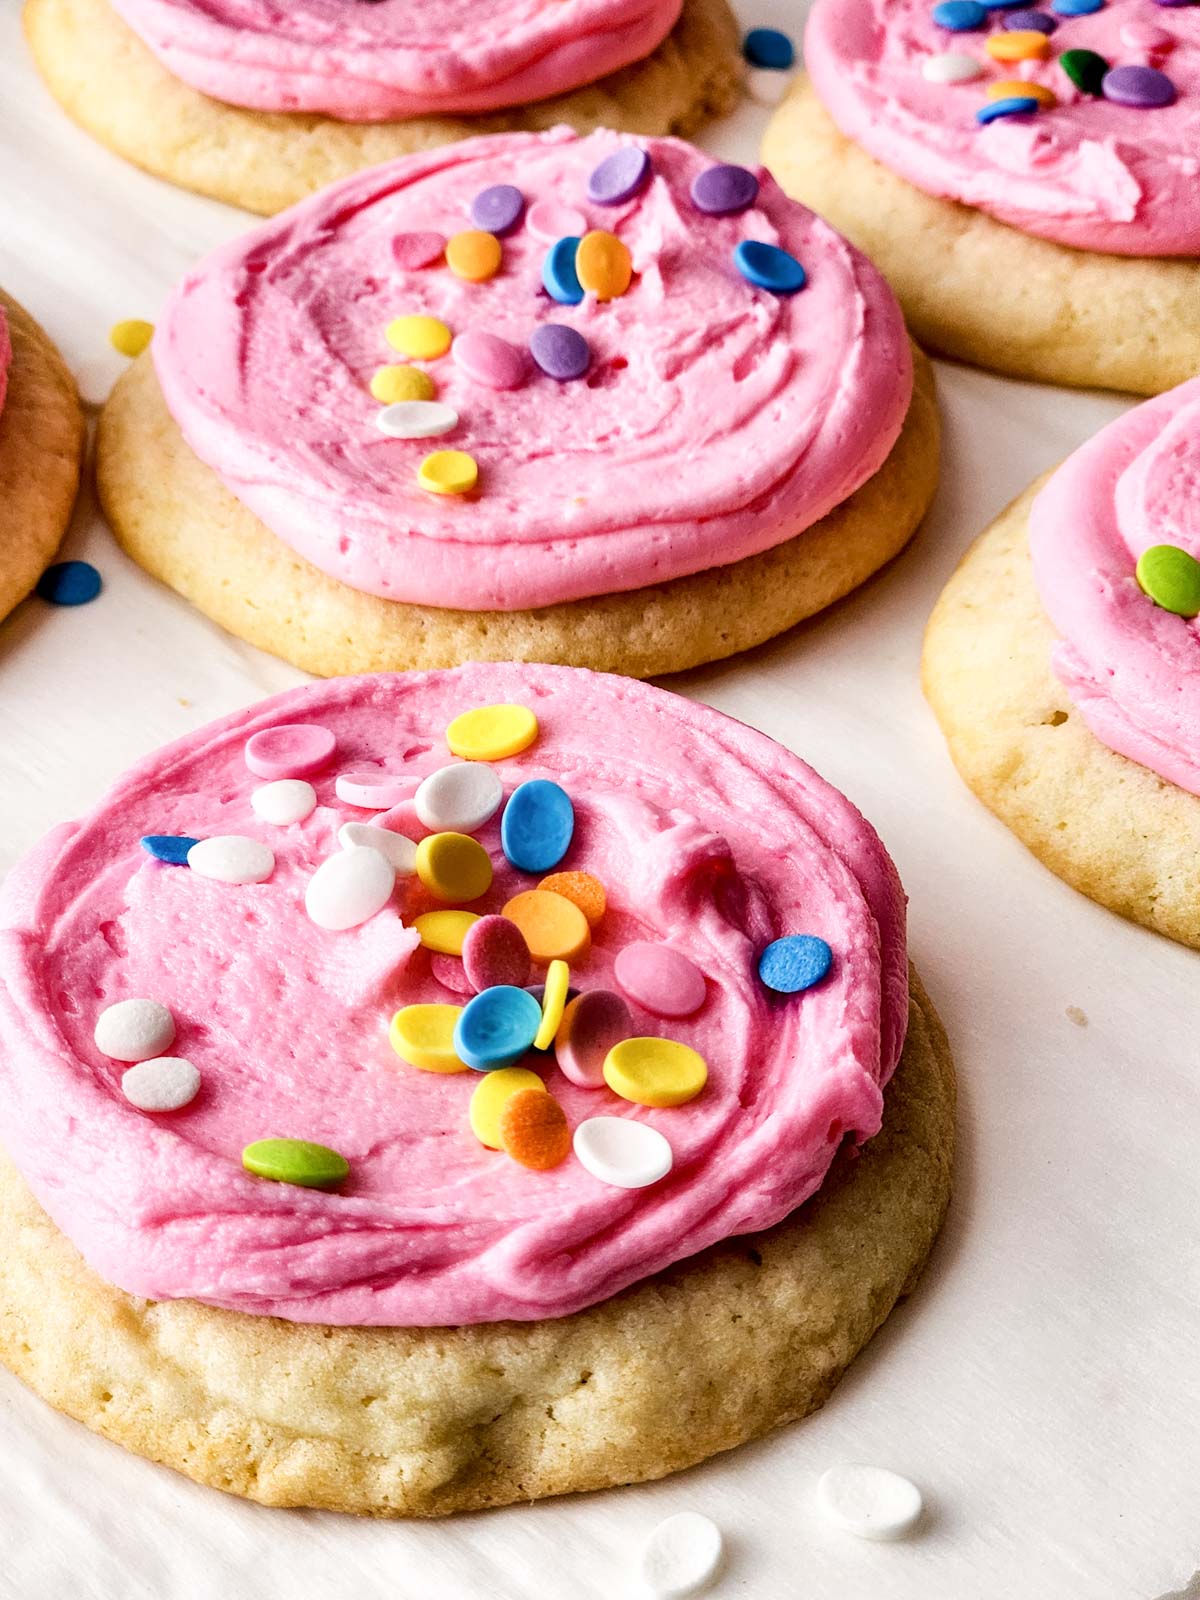 Sugar cookies with pink frosting and sprinkles.